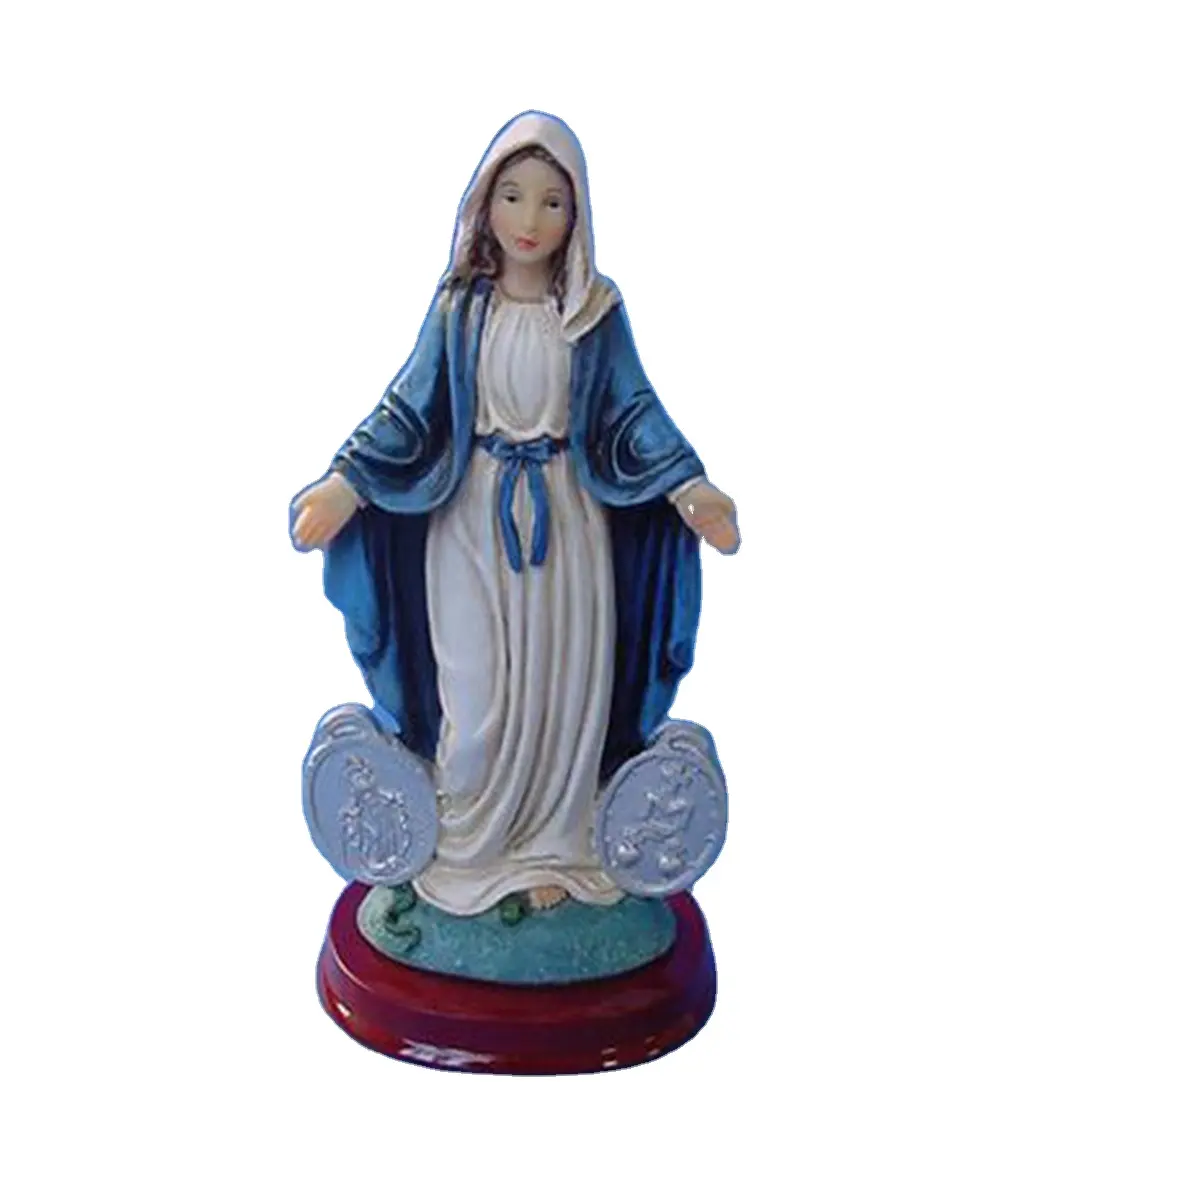 Estatua de Madonna católica religiosa de resina personalizada para decoración del hogar